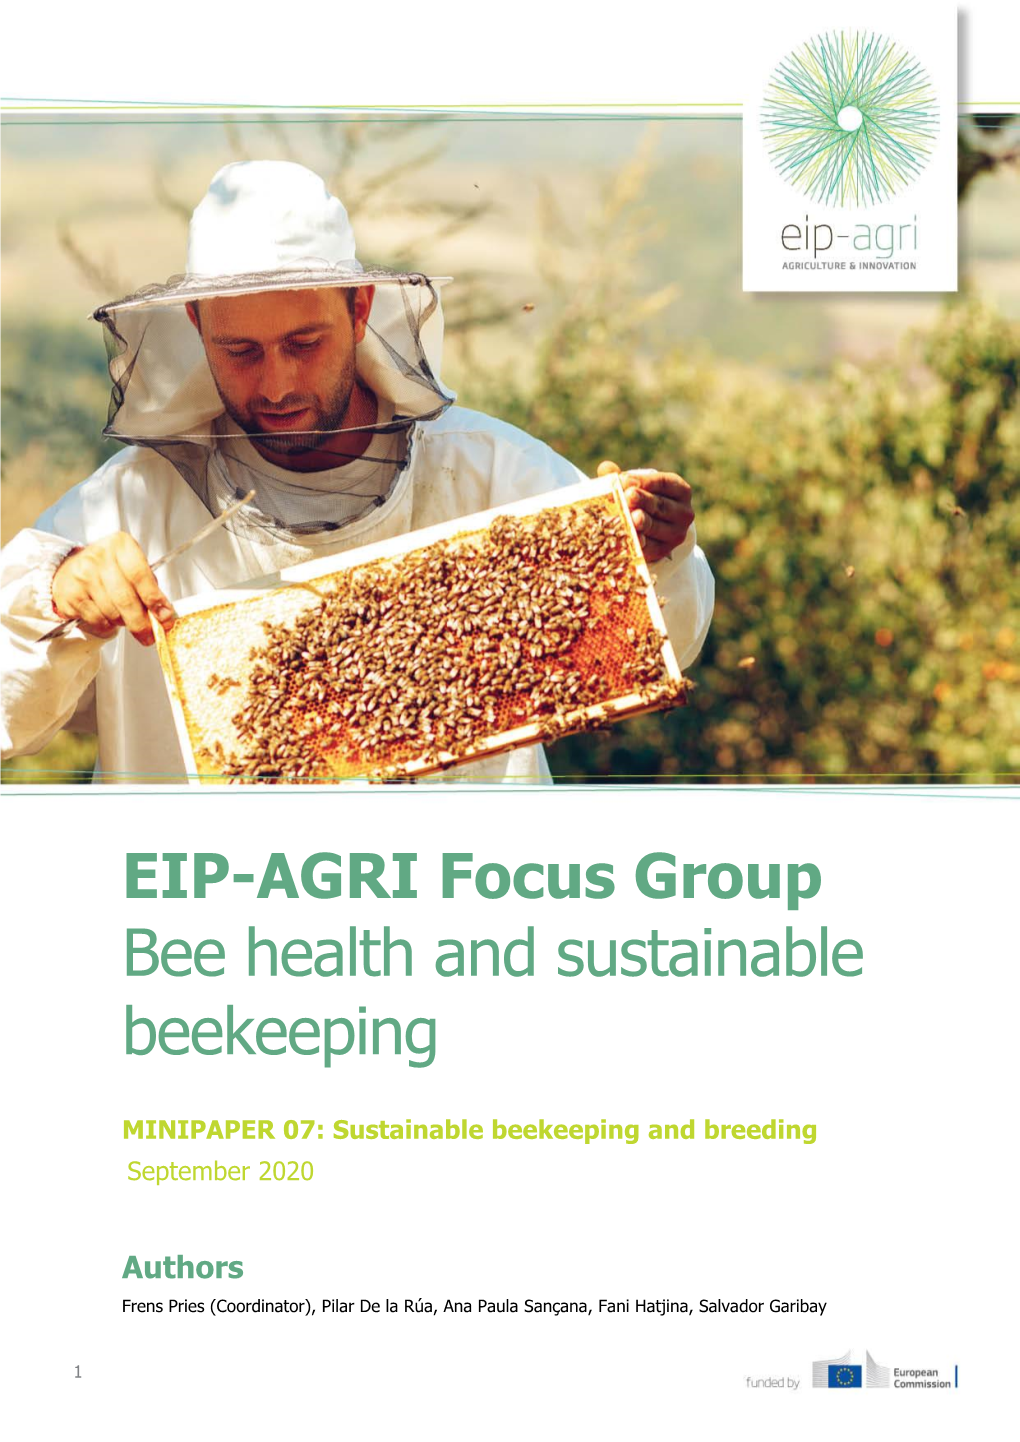 Sustainable Beekeeping and Breeding